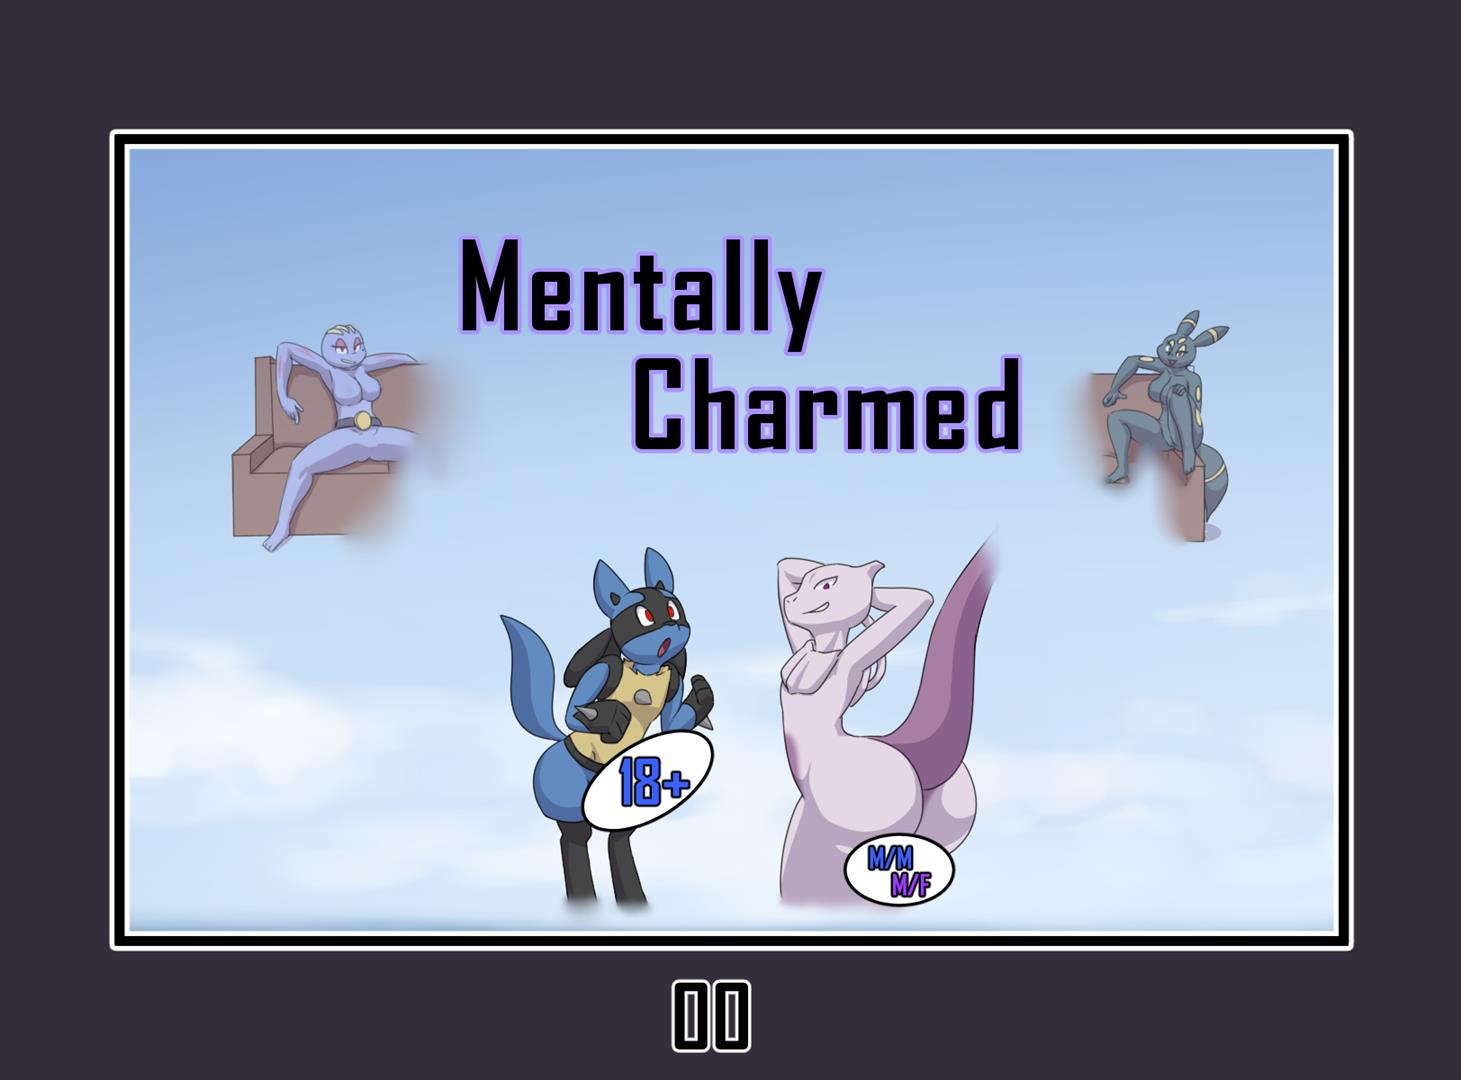 Mentally Charmed